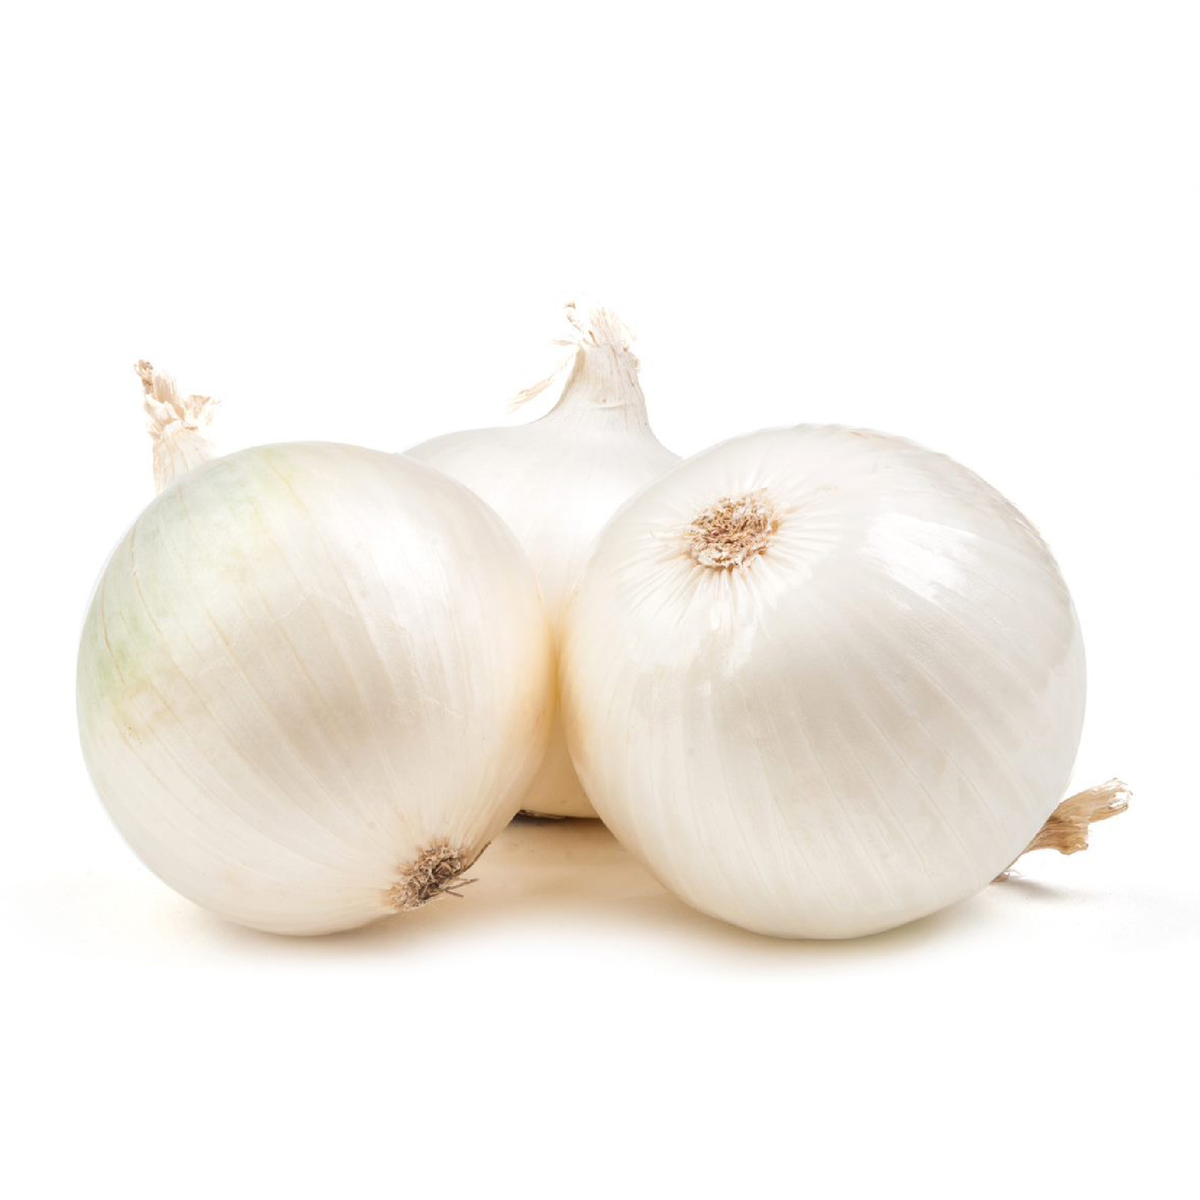 Onion White Spain 1 kg